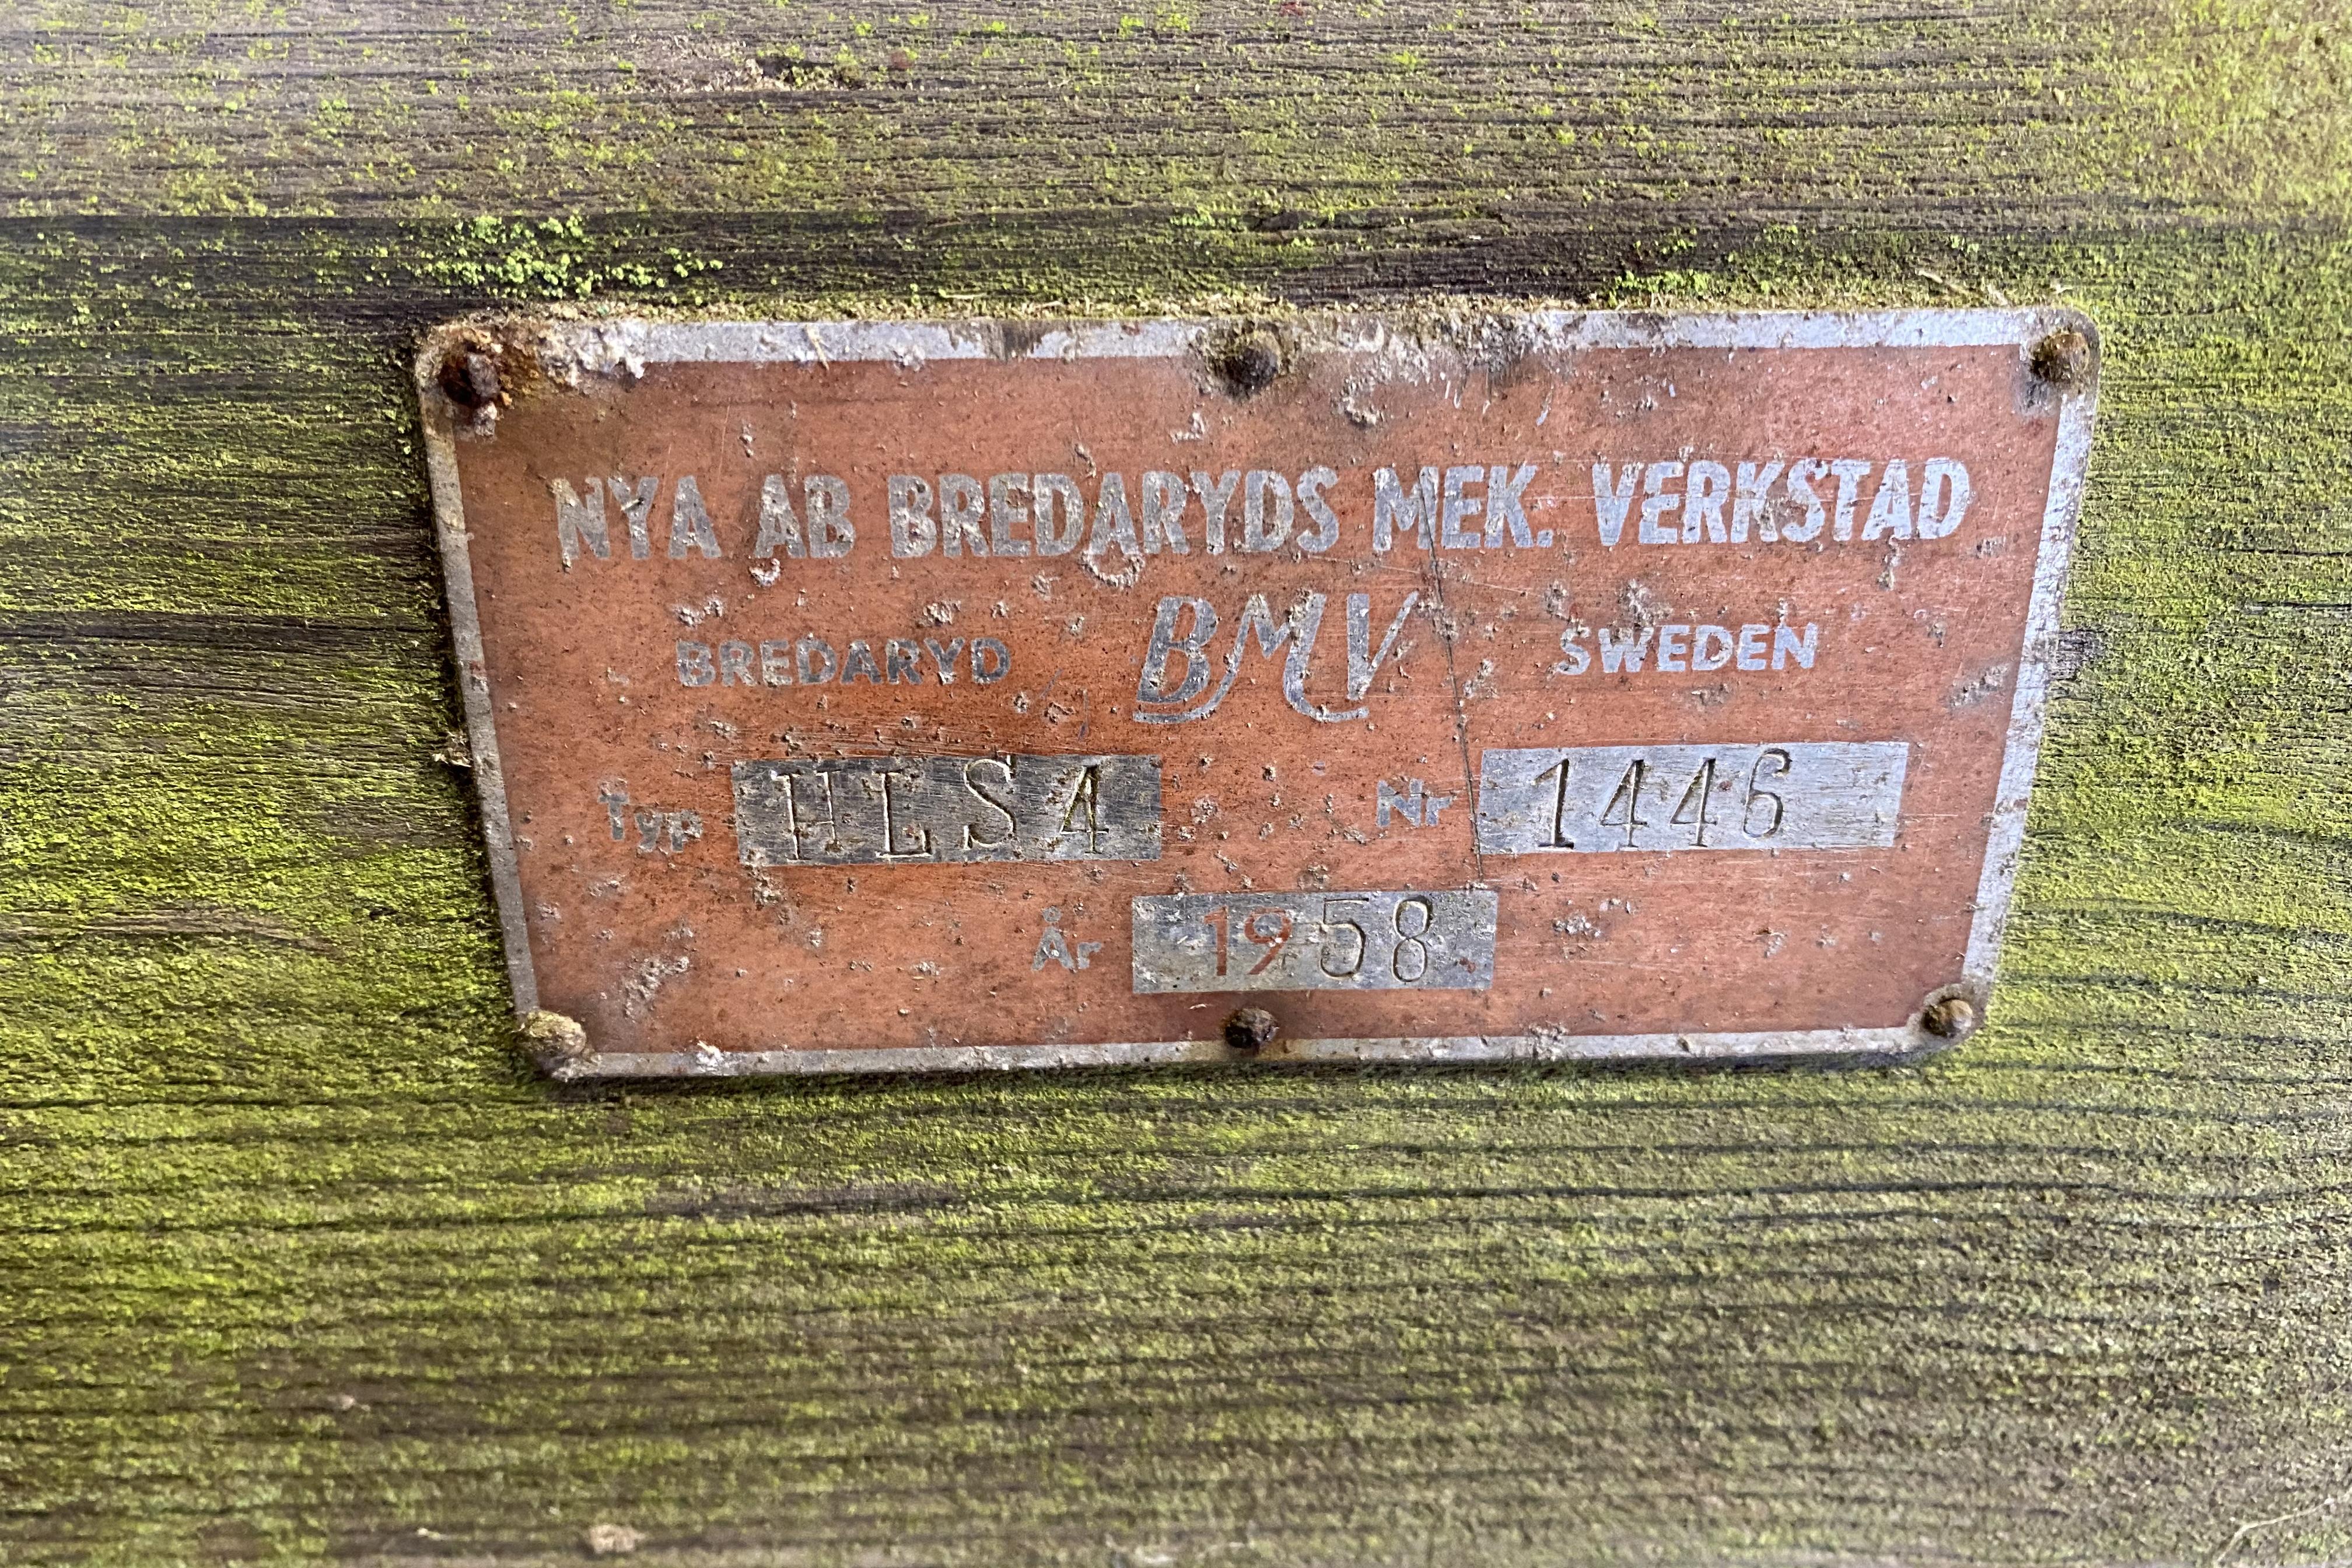 Bredaryds  HLS 4 - sågverk  - 0 km - 1958